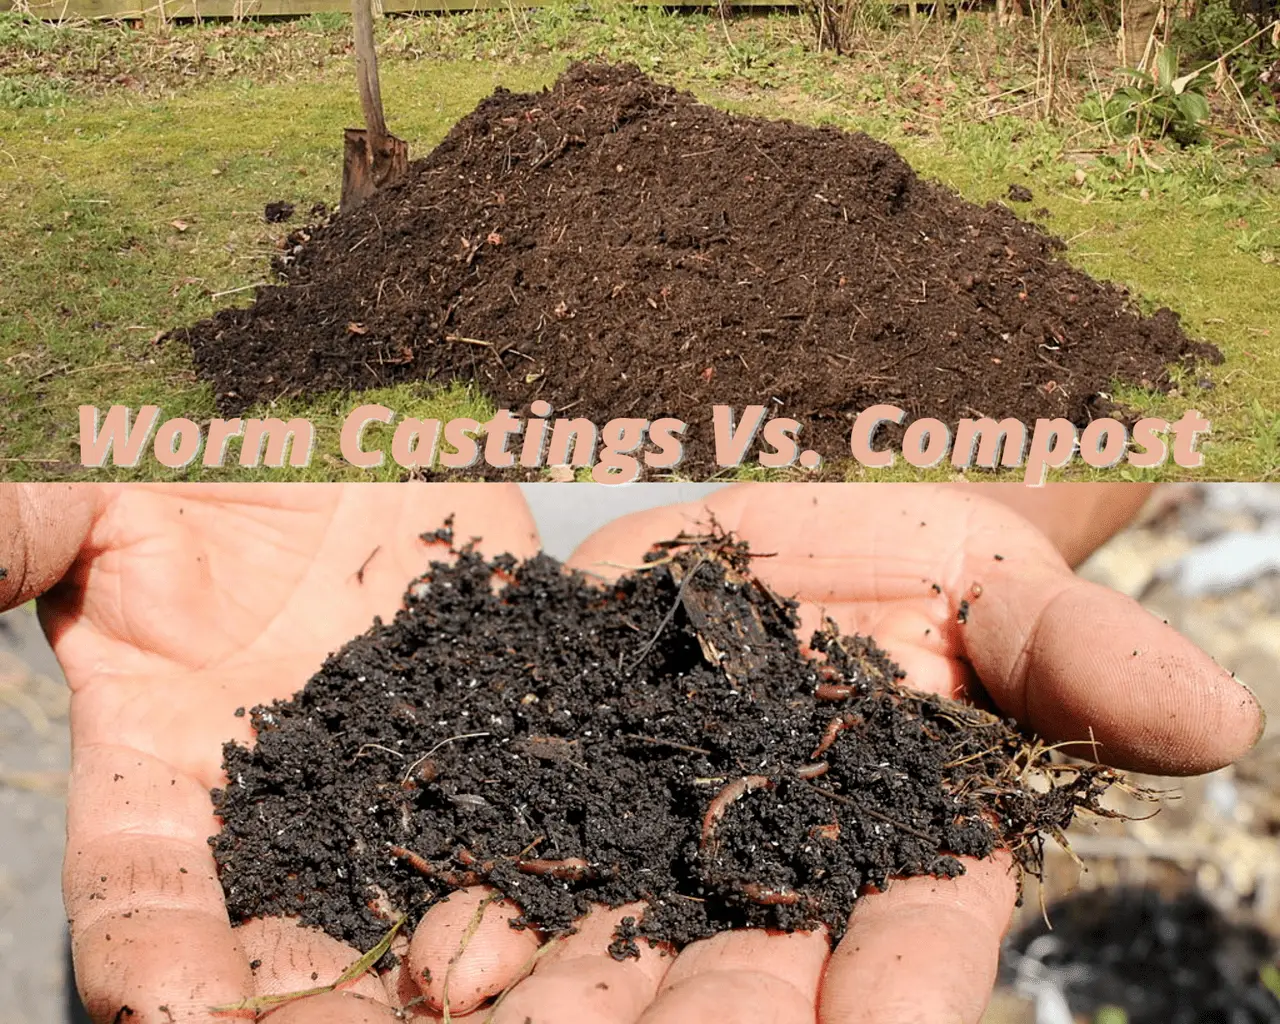 Worm castings vs compost